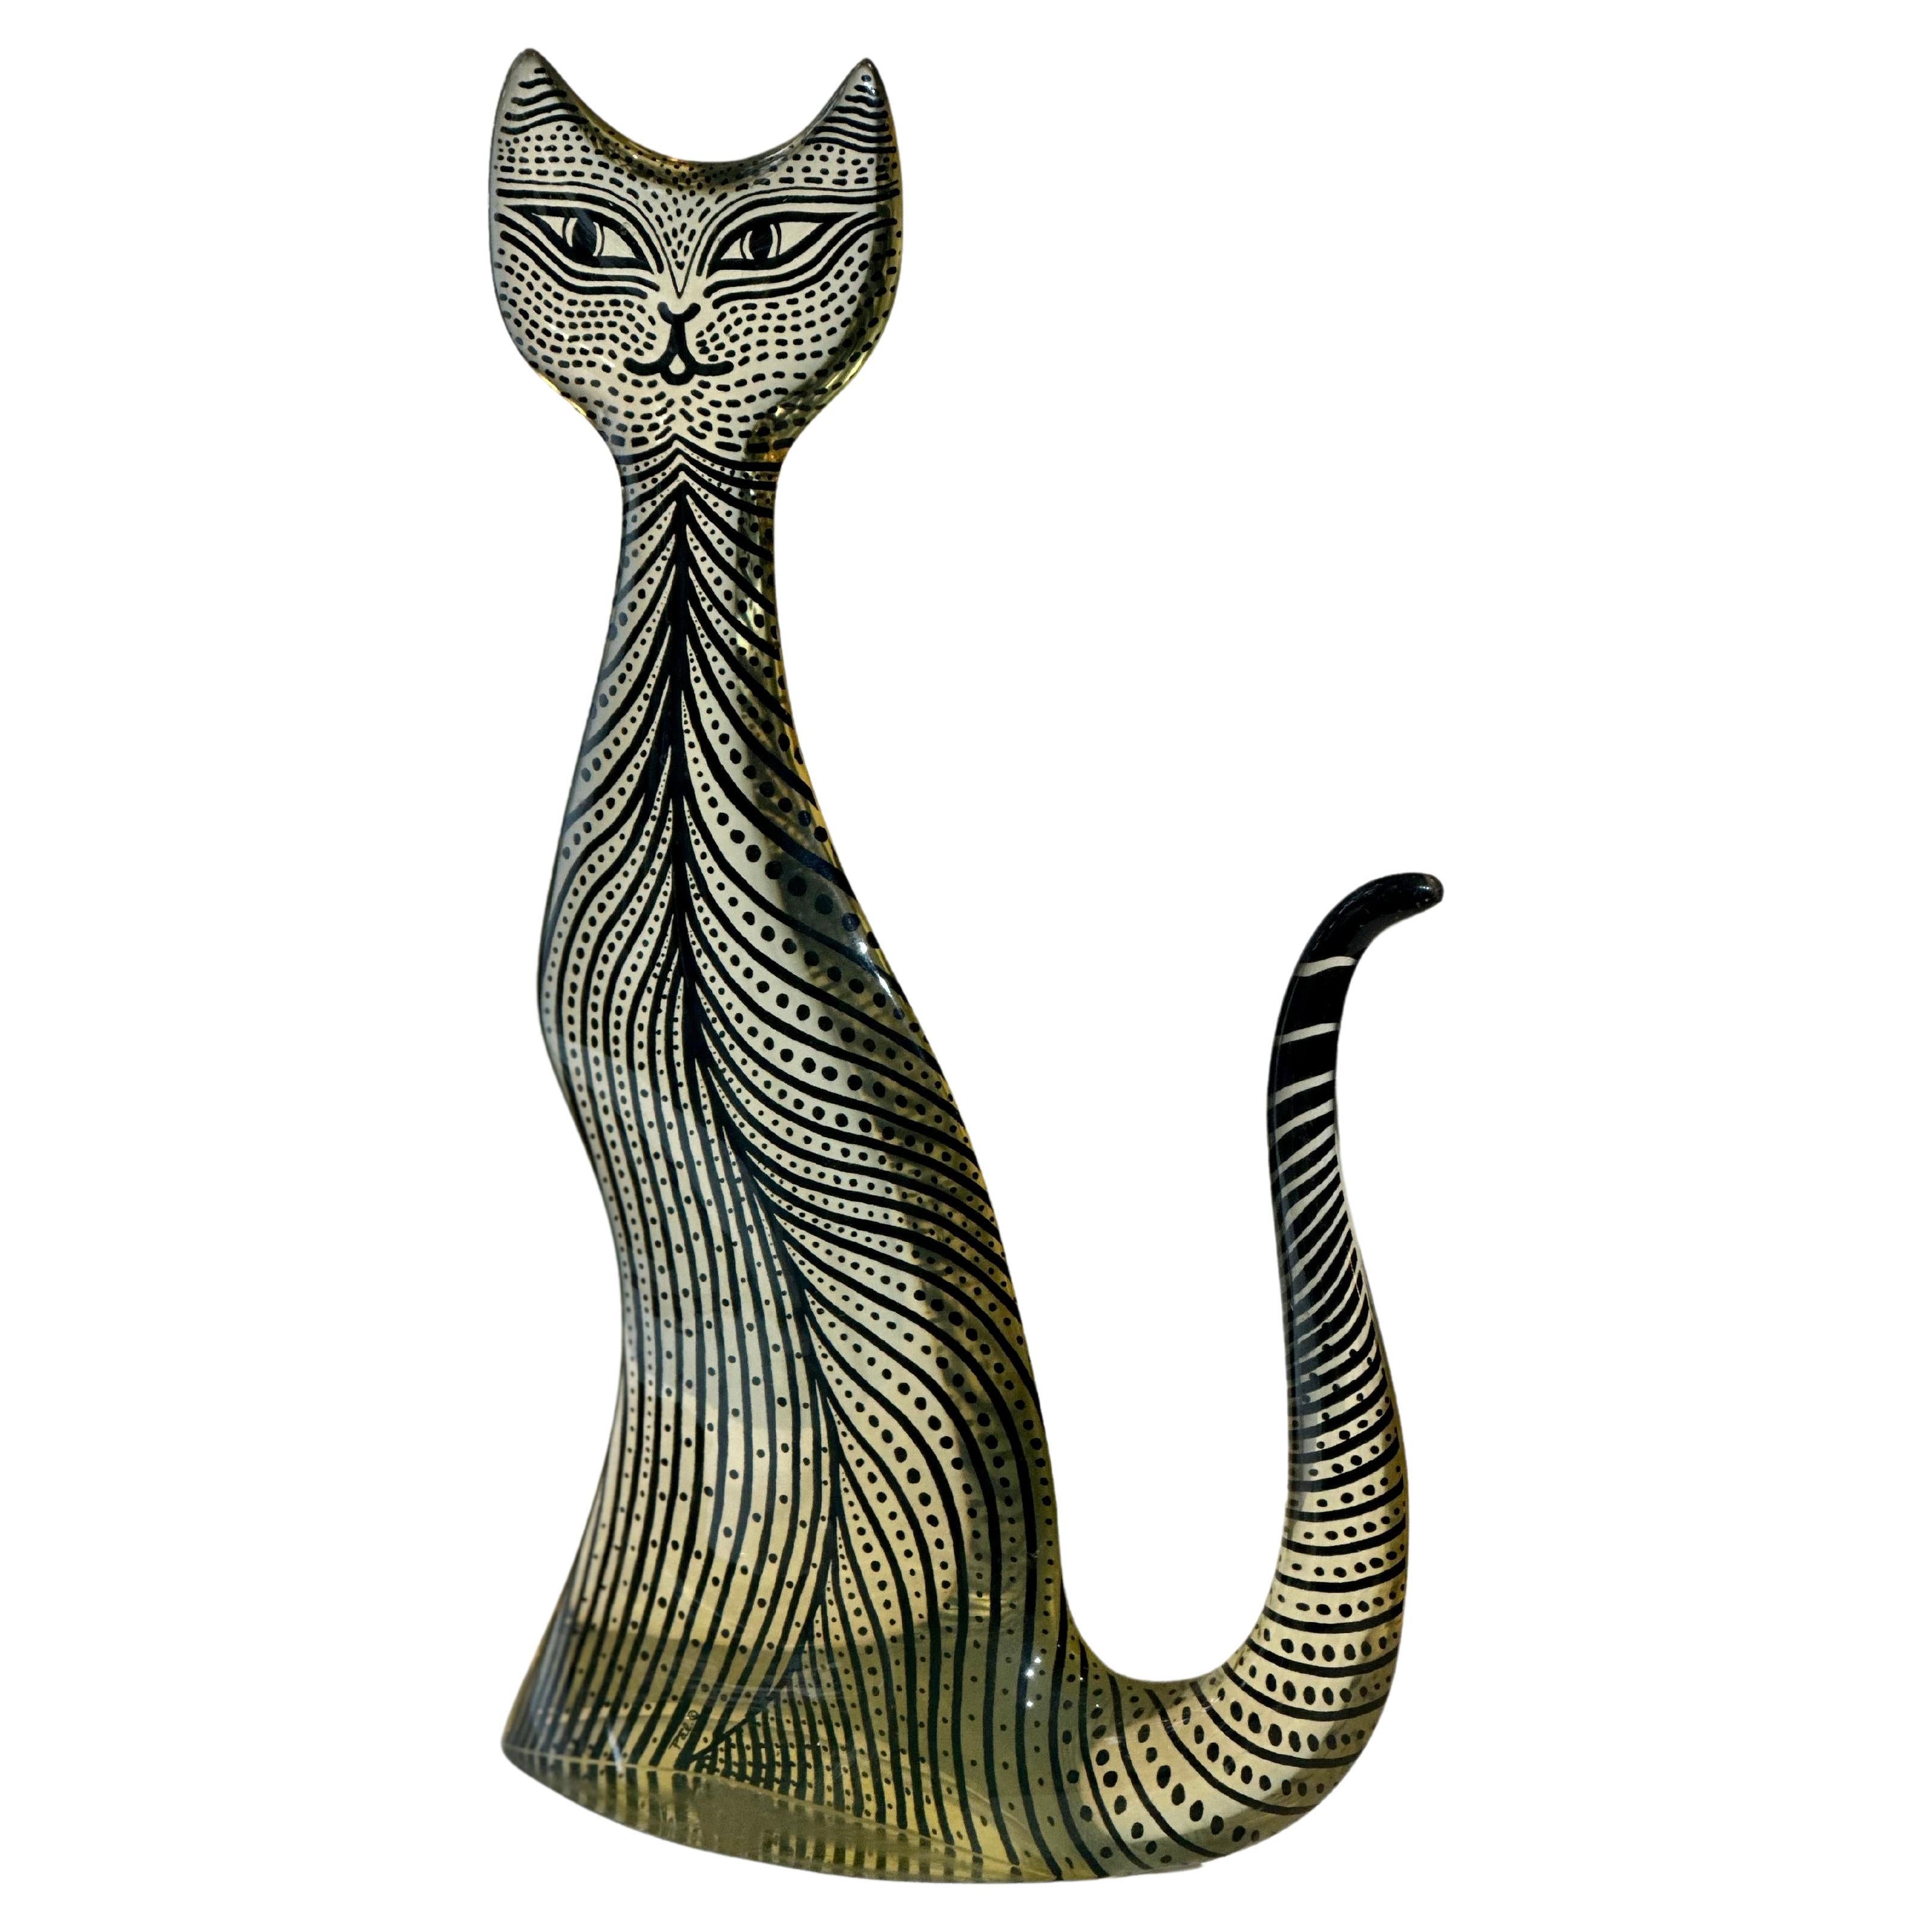 Abraham Palatnik. Op Art Katzenskulptur aus Polyesterharz 1970er Jahre